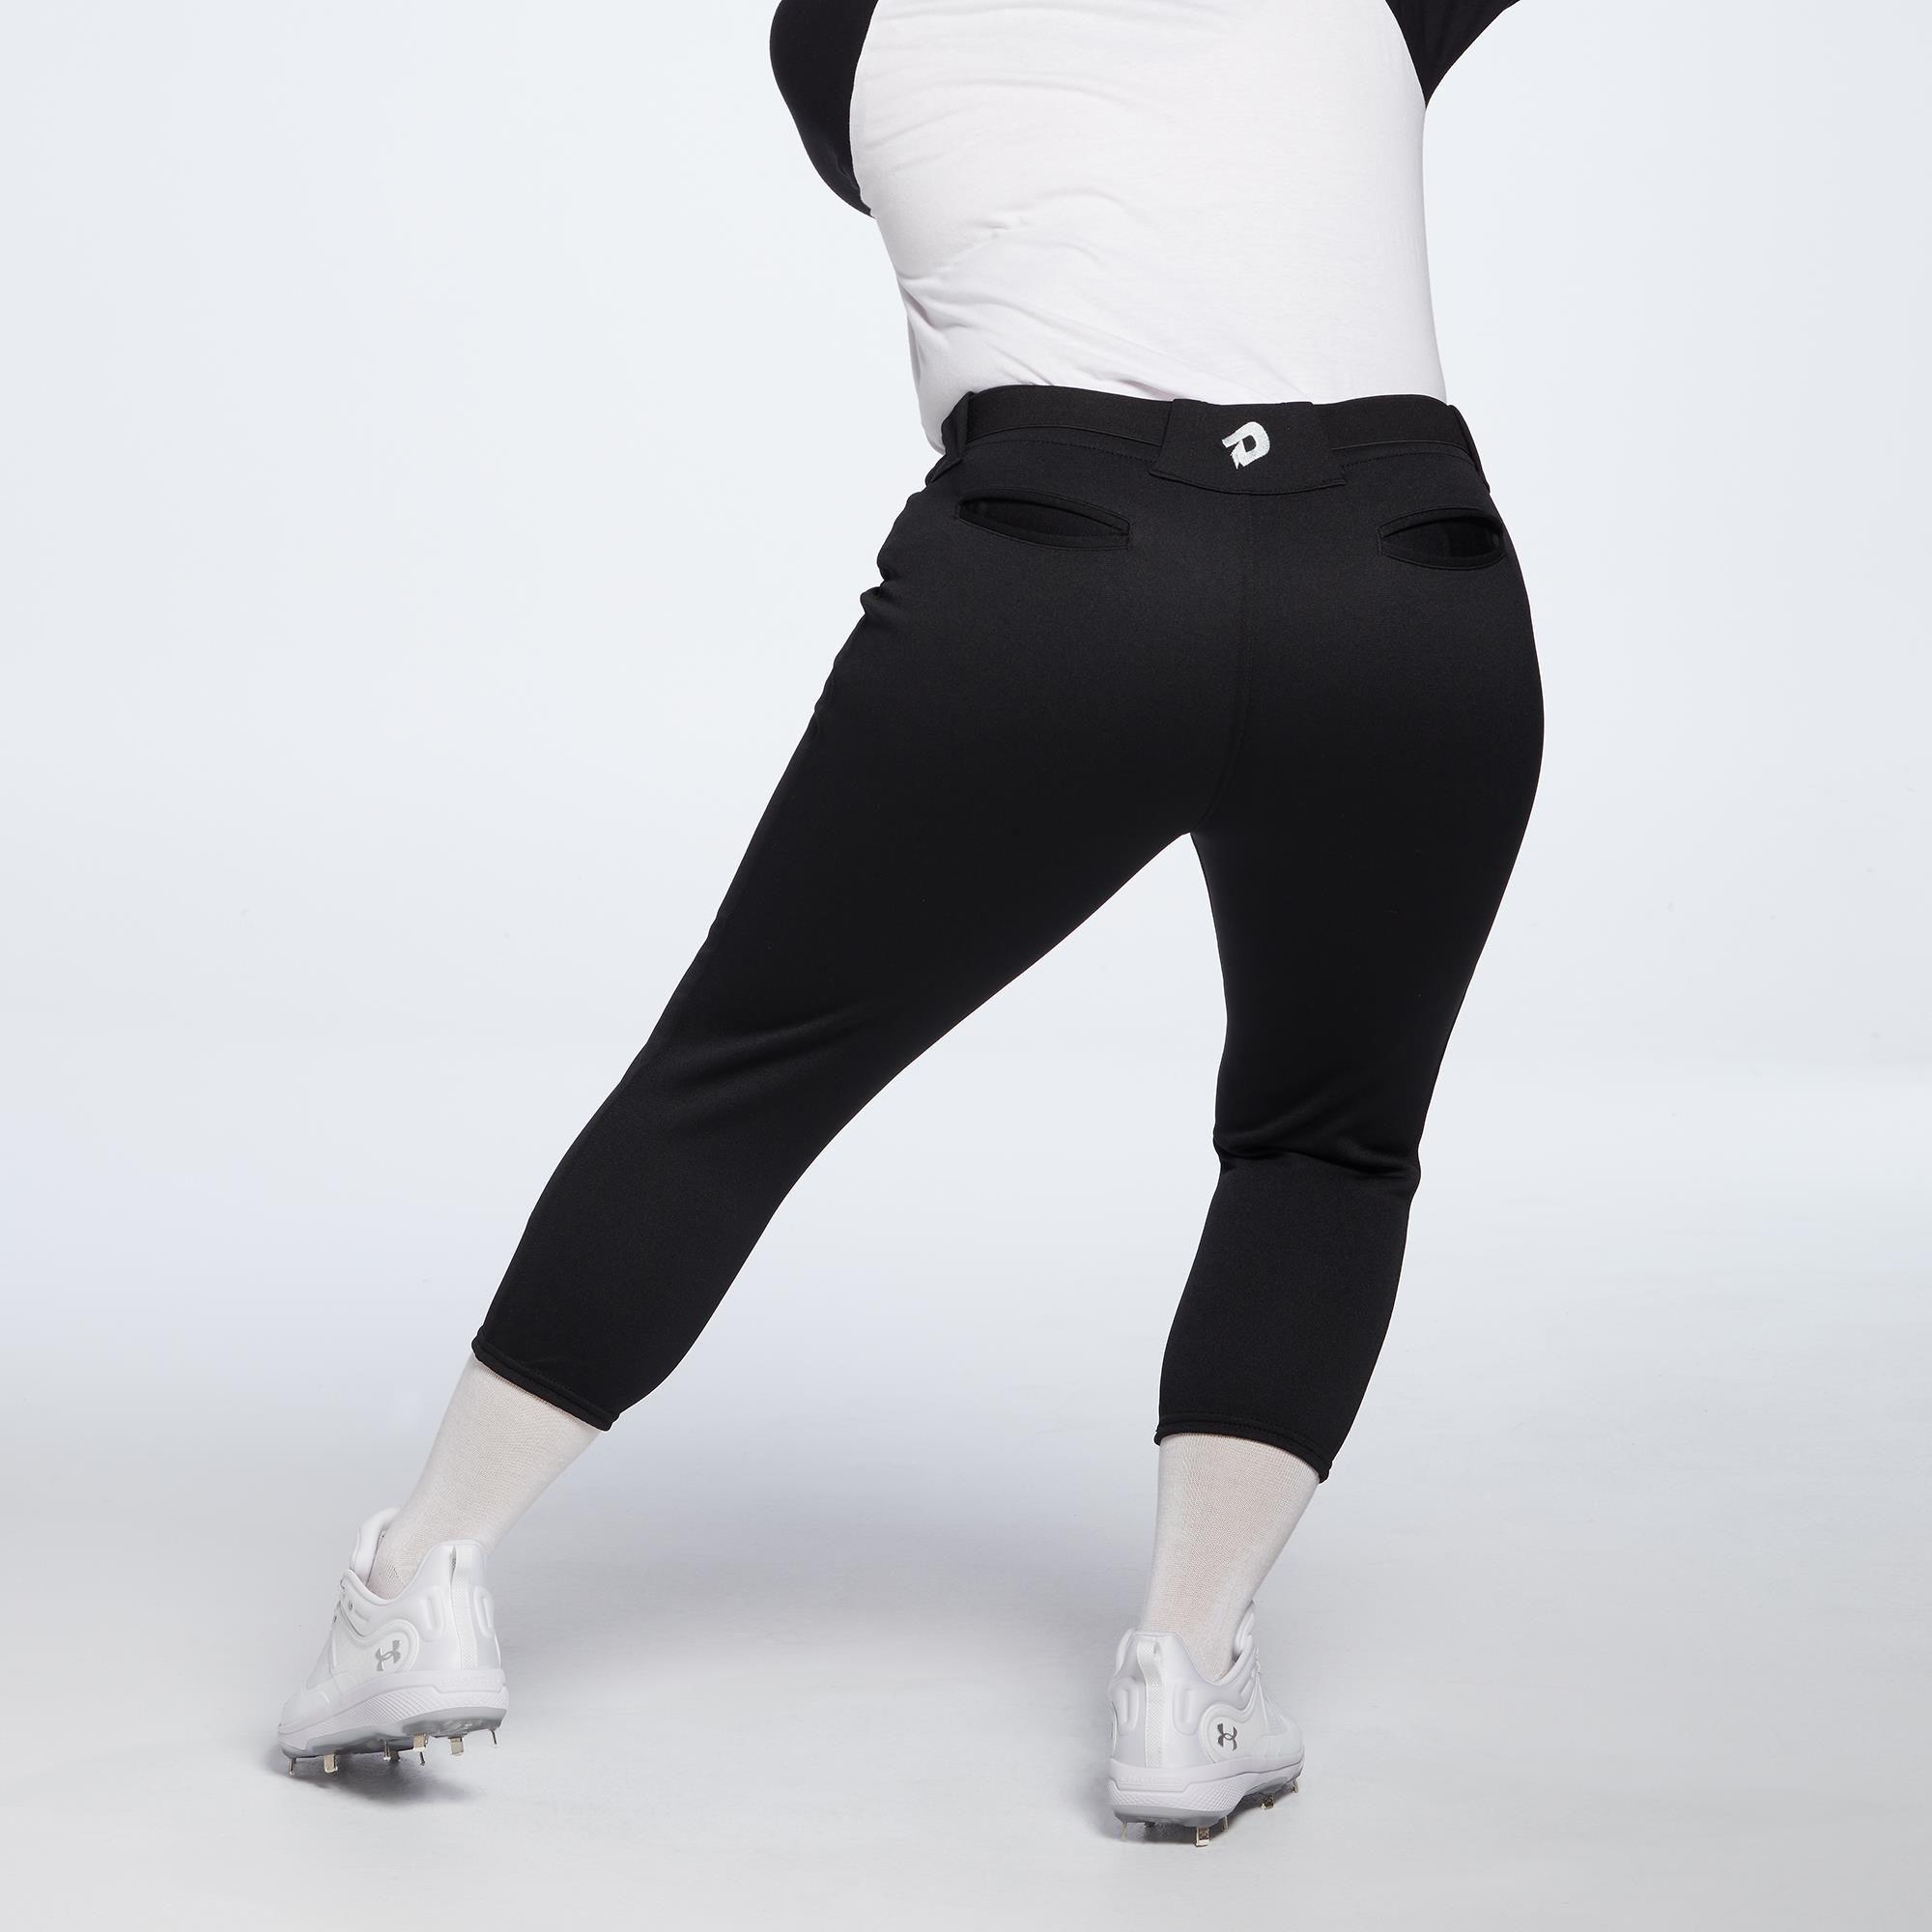 DeMarini Women's Fierce Softball Pants